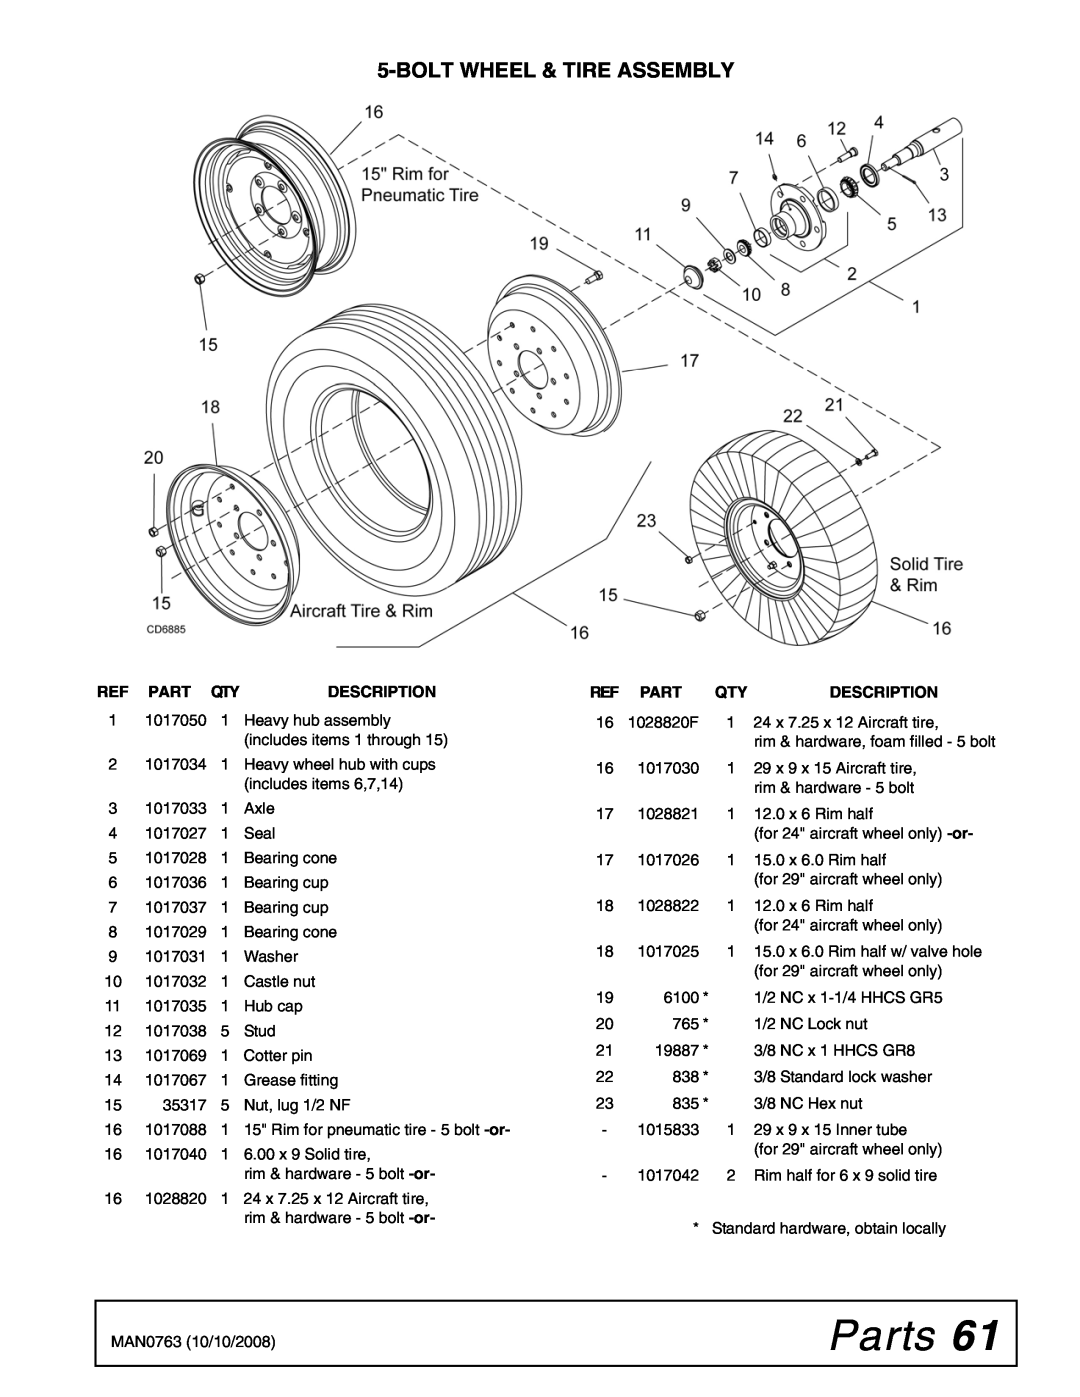 Woods Equipment BW240HDQ manual Parts, Bolt Wheel & Tire Assembly, Ref Part Qty, Description 